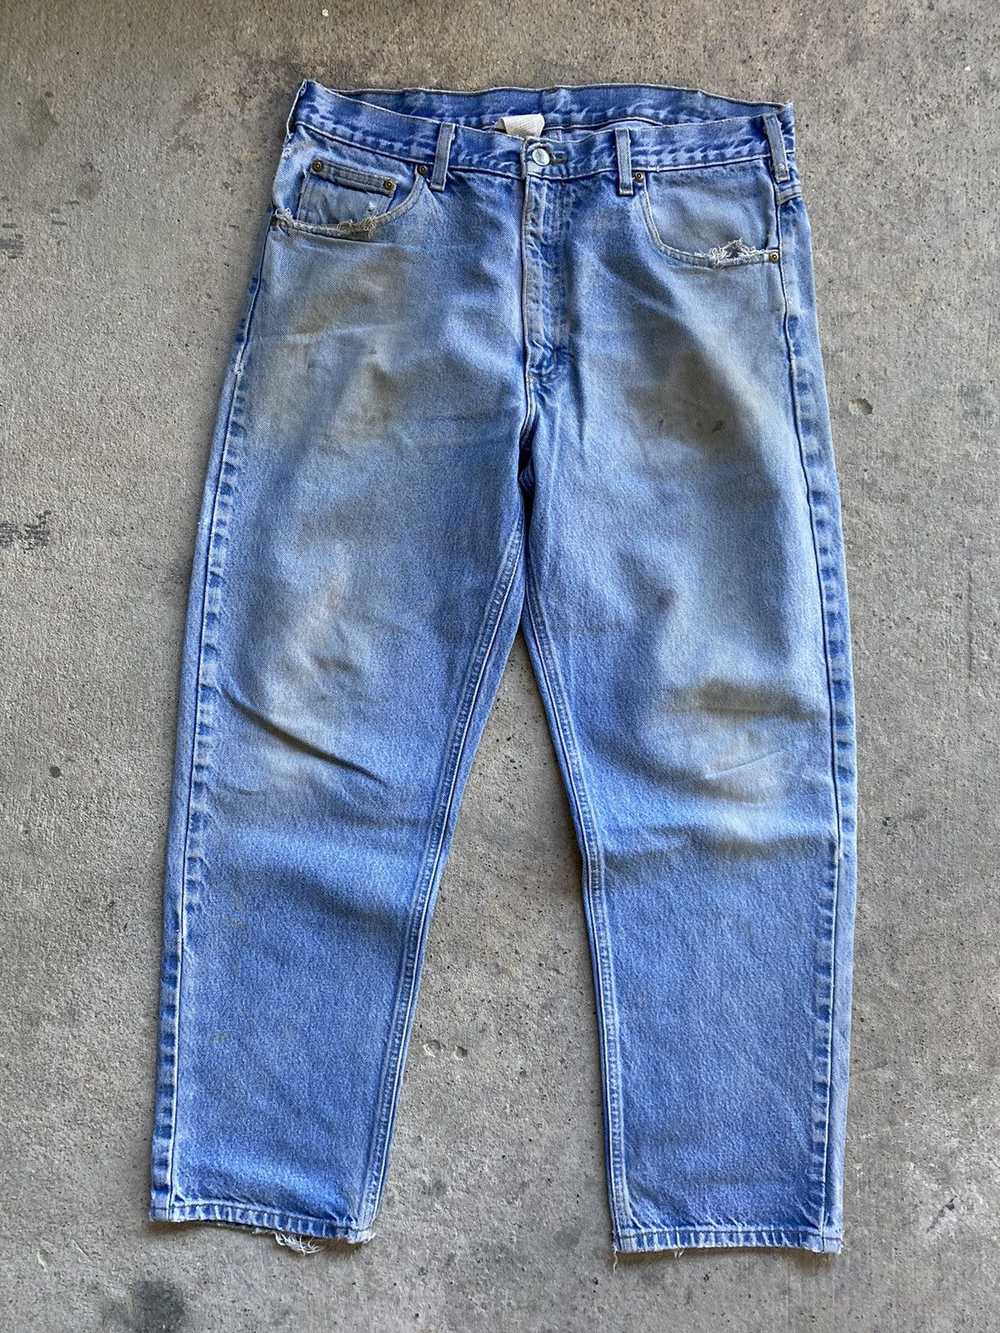 Carhartt × Vintage Vintage Carhartt Denim Jeans - image 2